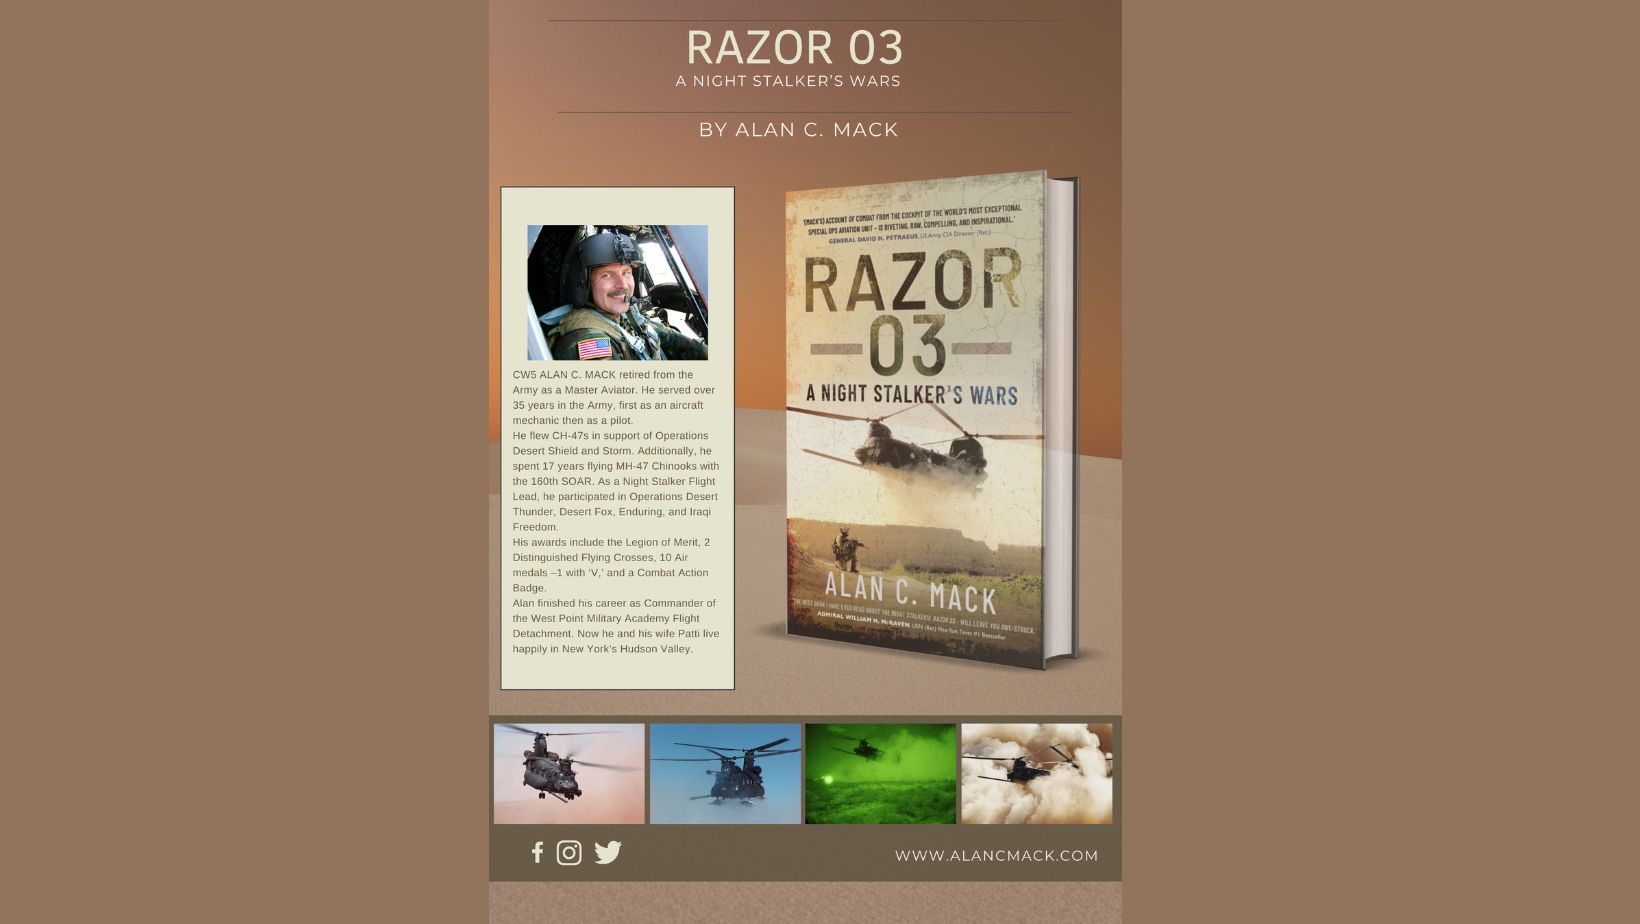 Promotional image showing "Razor 3" by Alan C. Mack